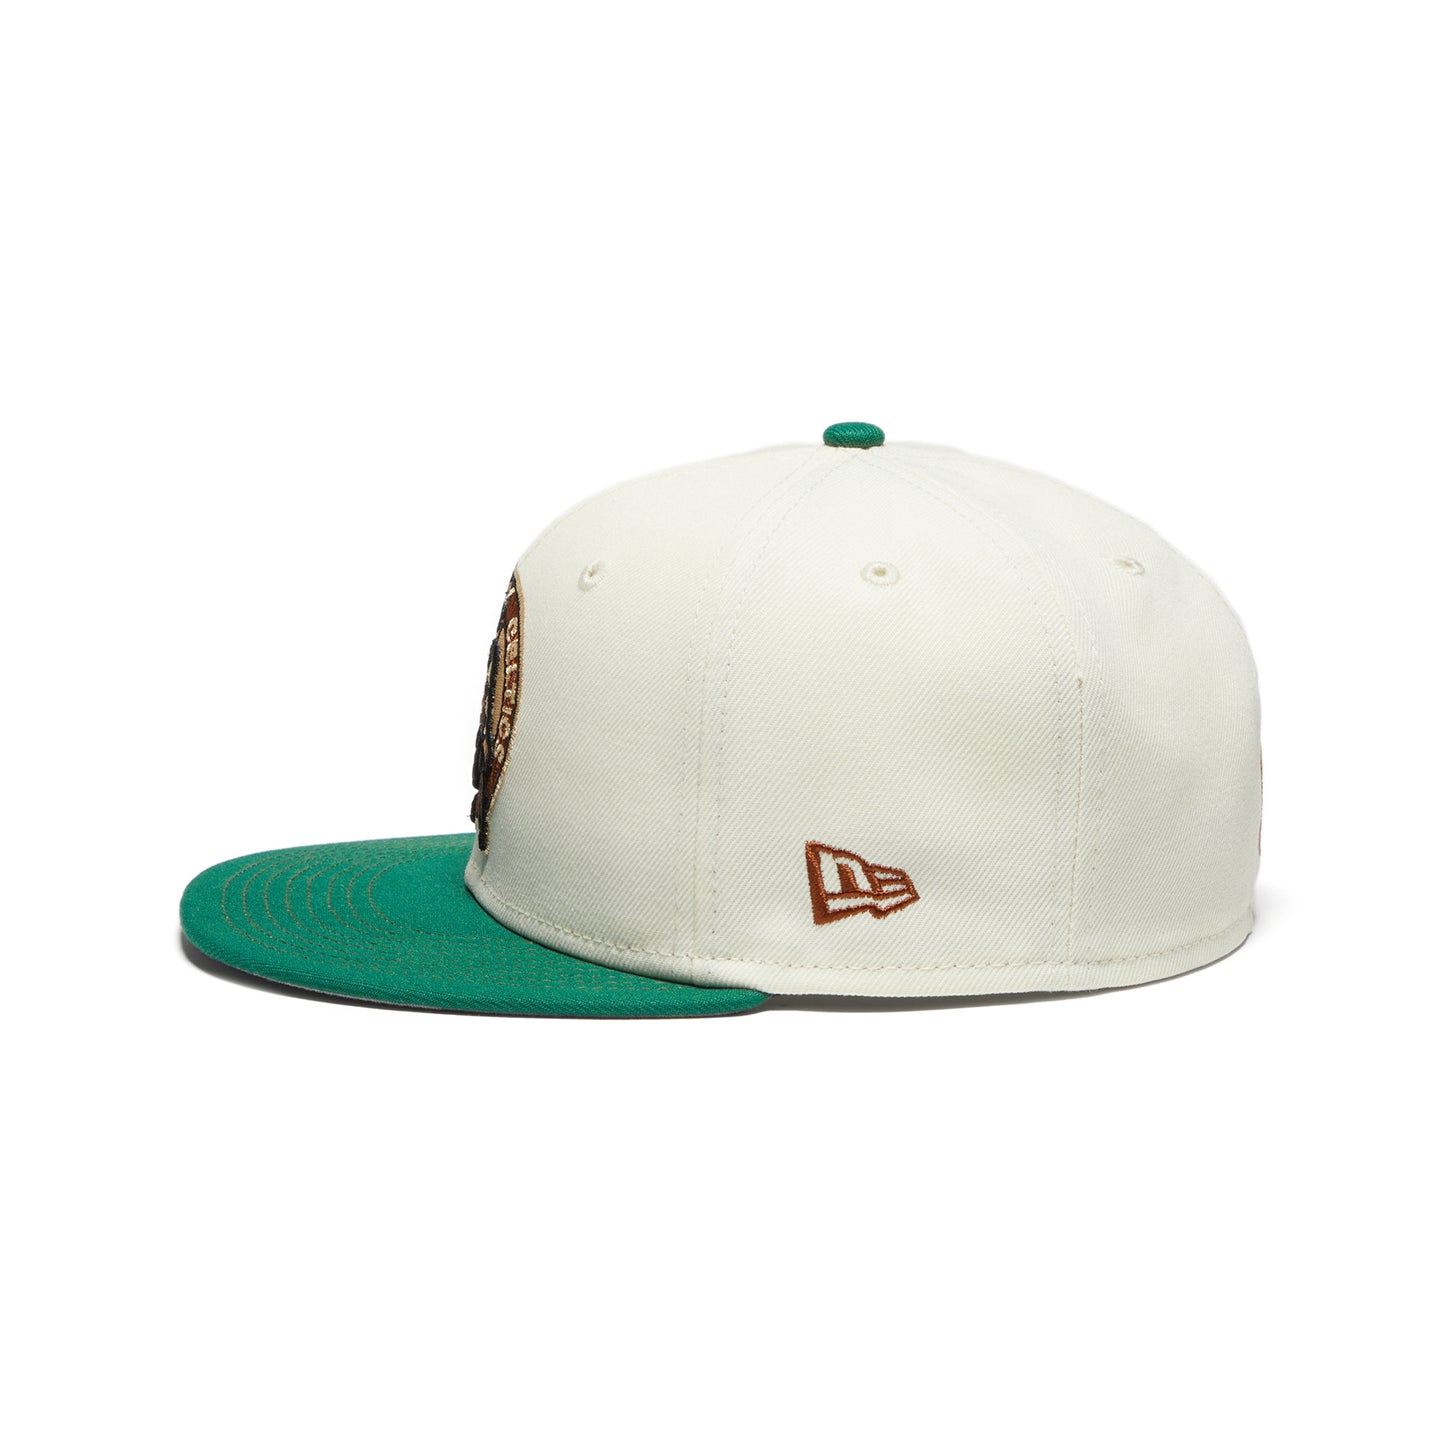 New Era Boston Celtics 59Fifty Fitted Hat (White/Green)